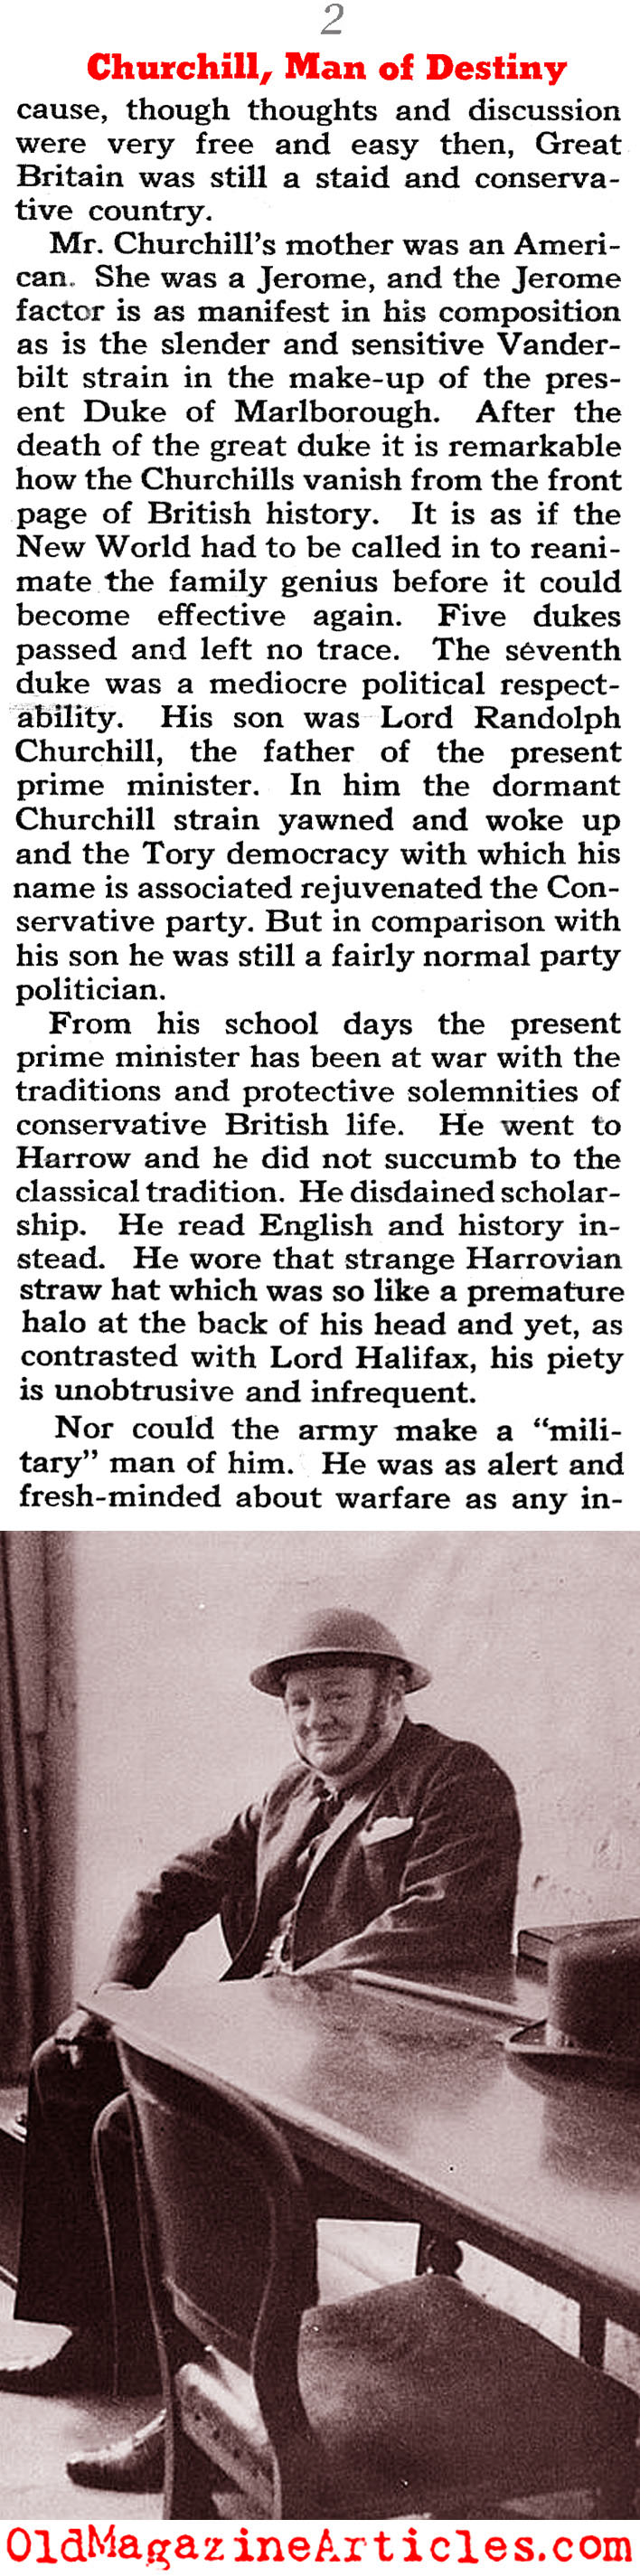 H.G. Wells on Winston Churchill (Collier's Magazine, 1940)